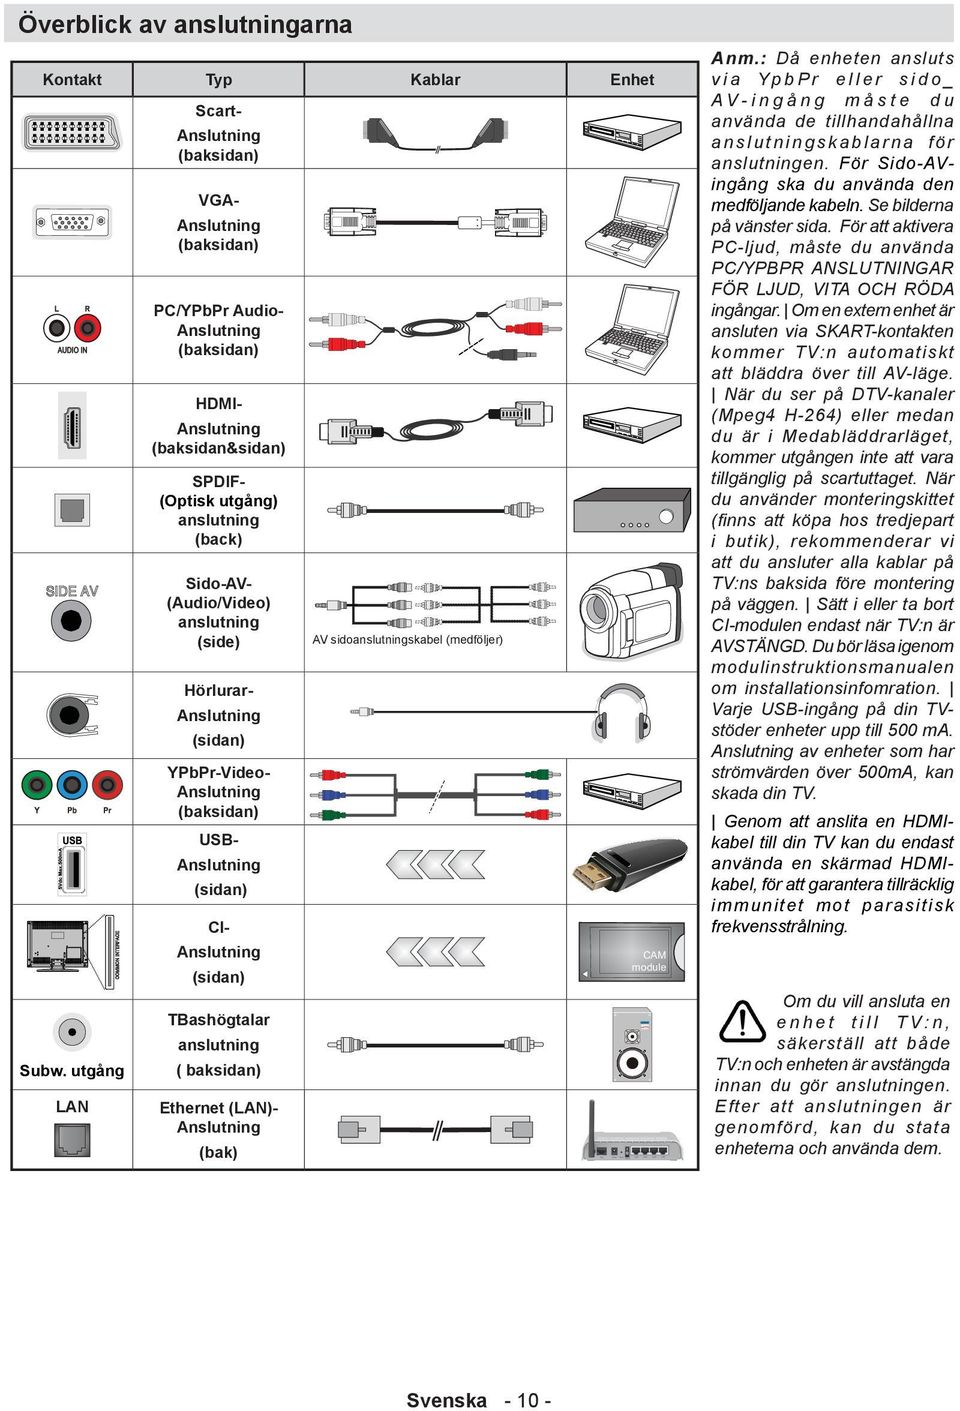 Anslutning (baksidan&sidan) Hörlurar- Anslutning (sidan) YPbPr-Video- Anslutning (baksidan) USB- Anslutning (sidan) CI- Anslutning (sidan) TBashögtalar anslutning ( baksidan) Ethernet (LAN)-